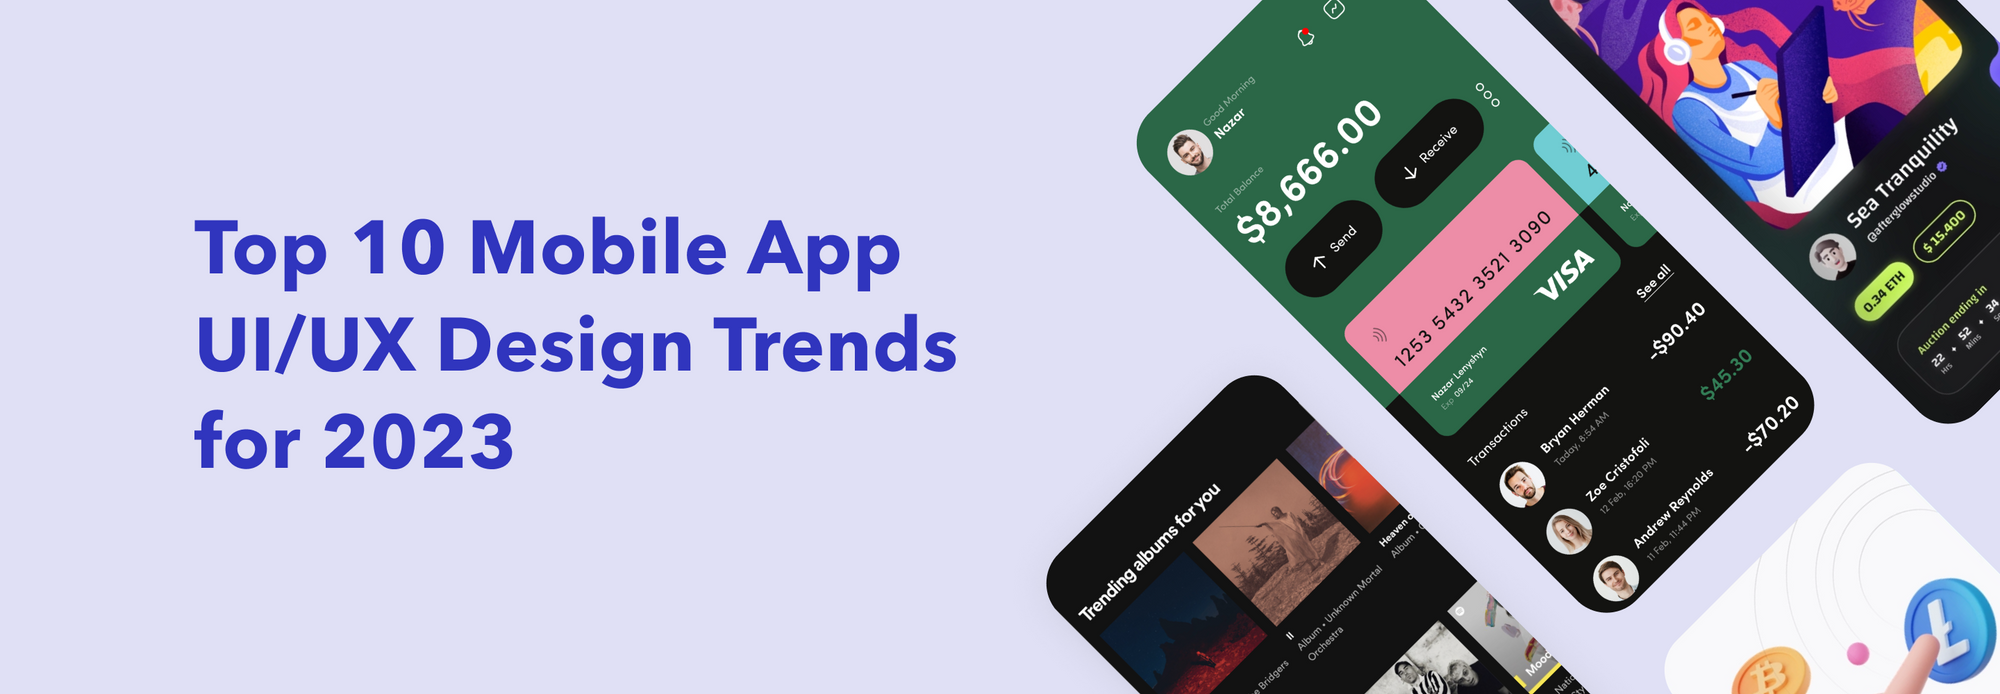 Top 10 Mobile App UI/UX Design Trends for 2023